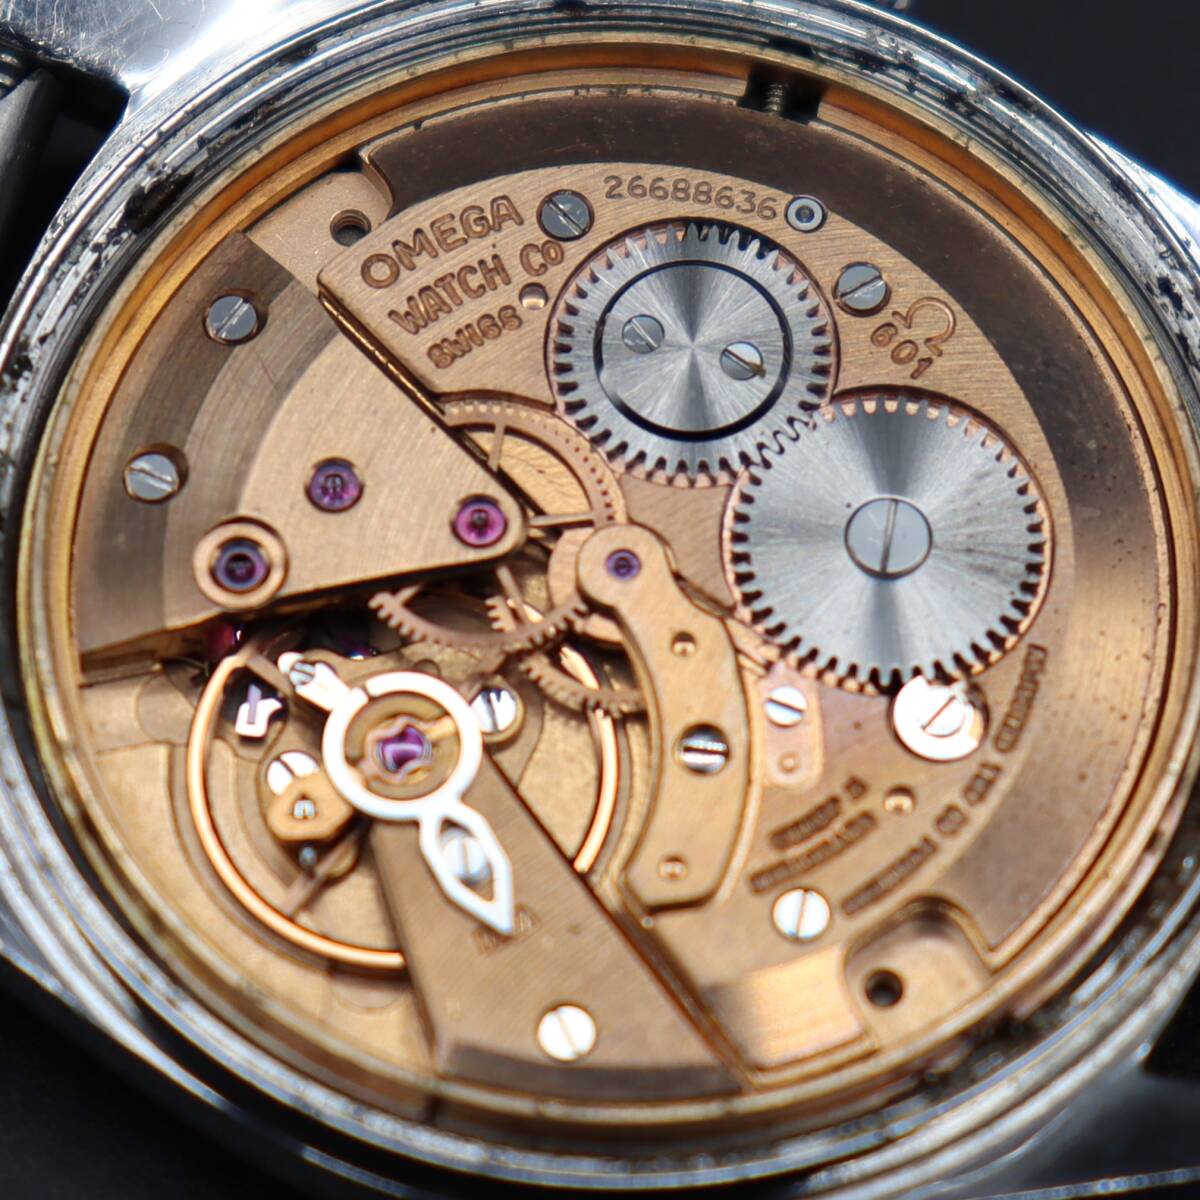 OMEGA Geneve オメガ ジュネーブ 手巻き Cal.601 Ref.135.041 シルバーカラー文字盤 1968-1970年頃 スイス製 アンティーク メンズ腕時計の画像8